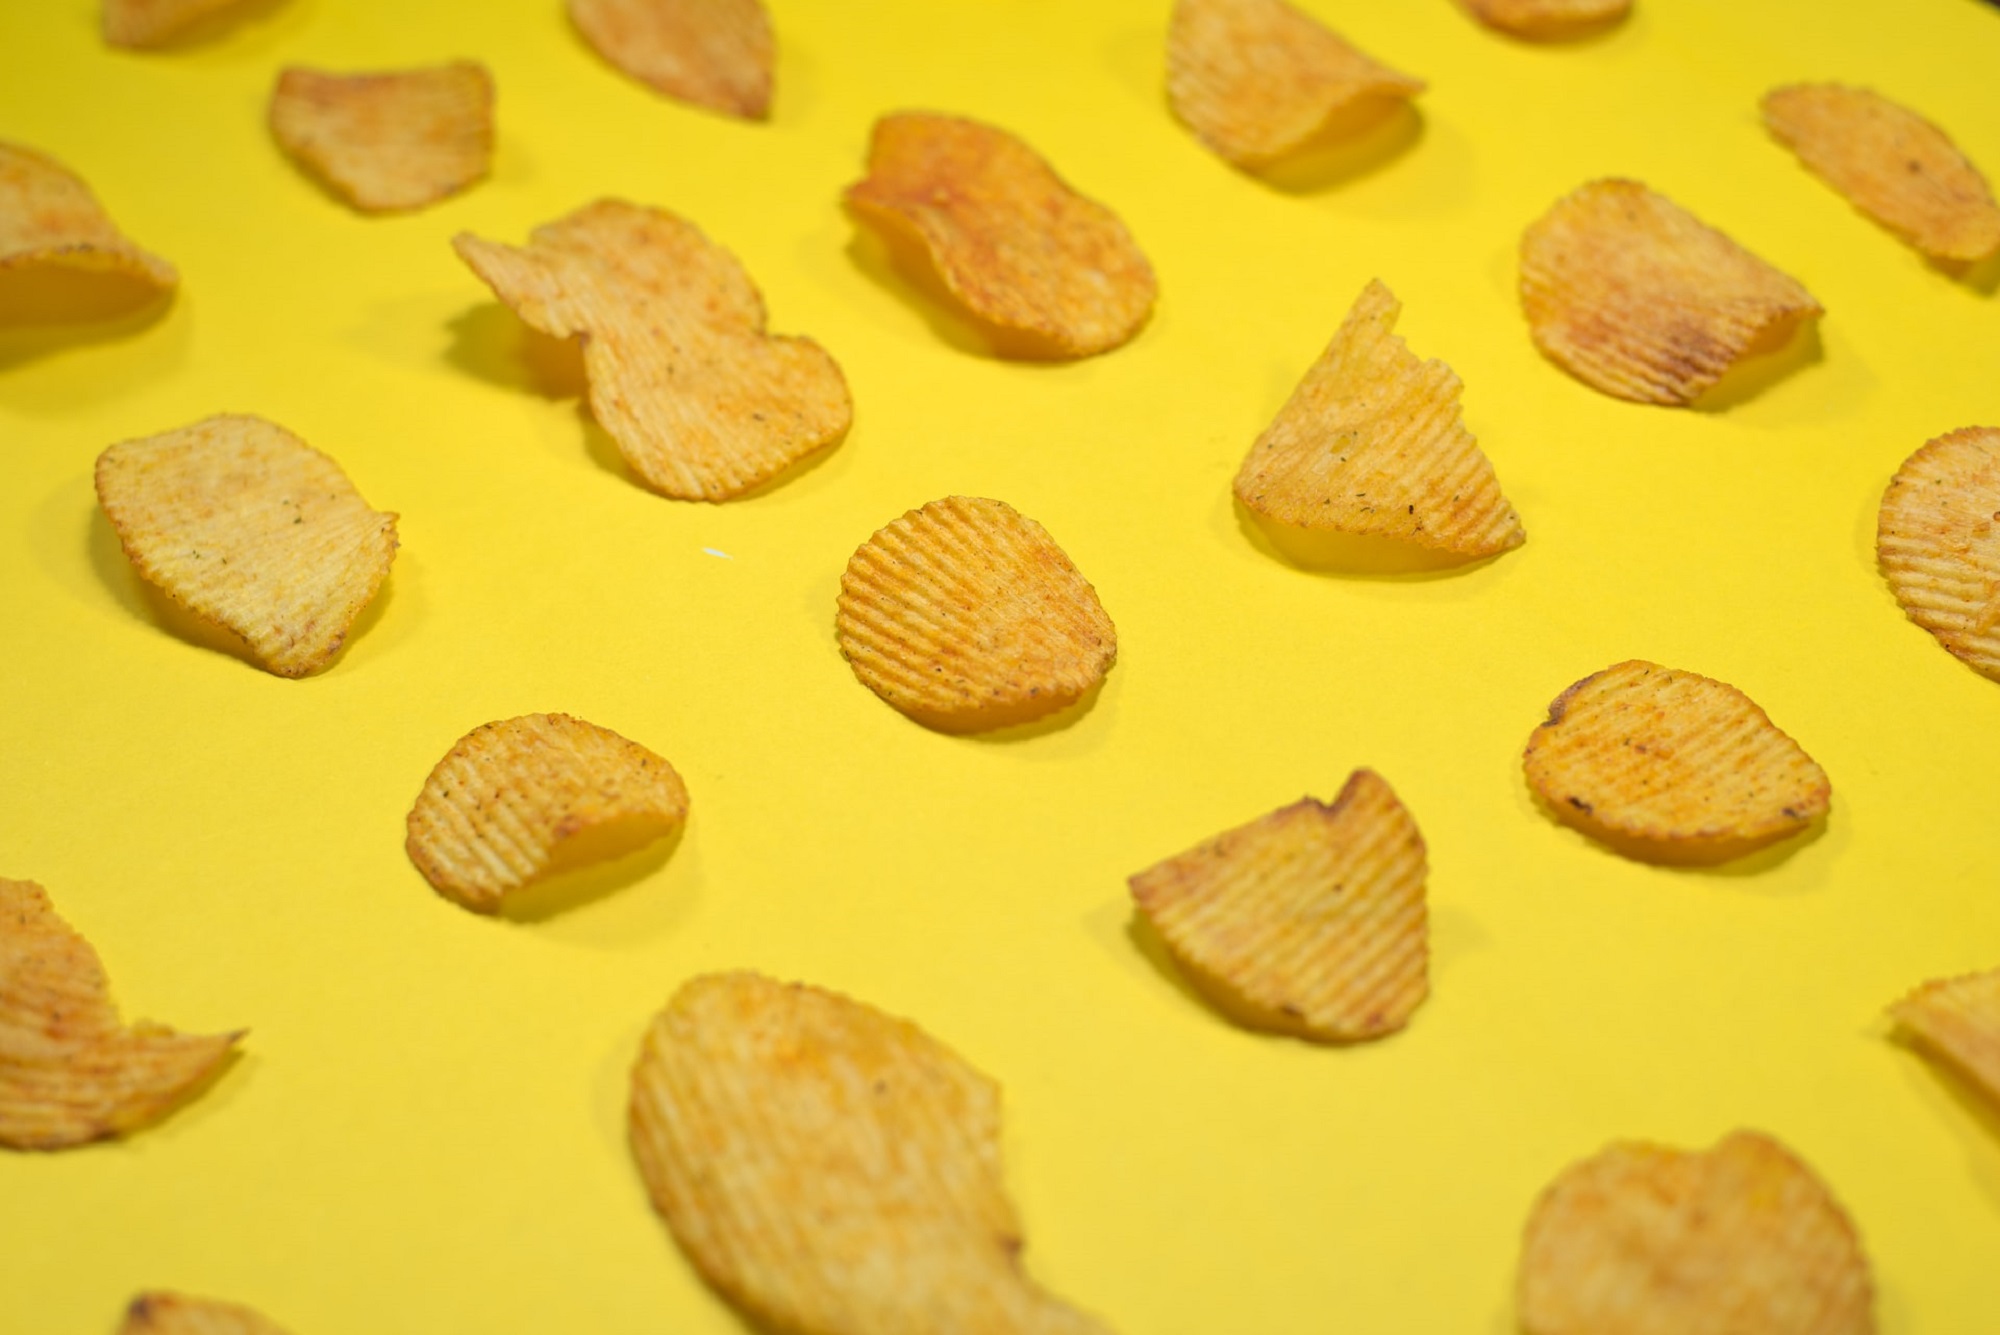 Salty ridged potato chips on yellow background